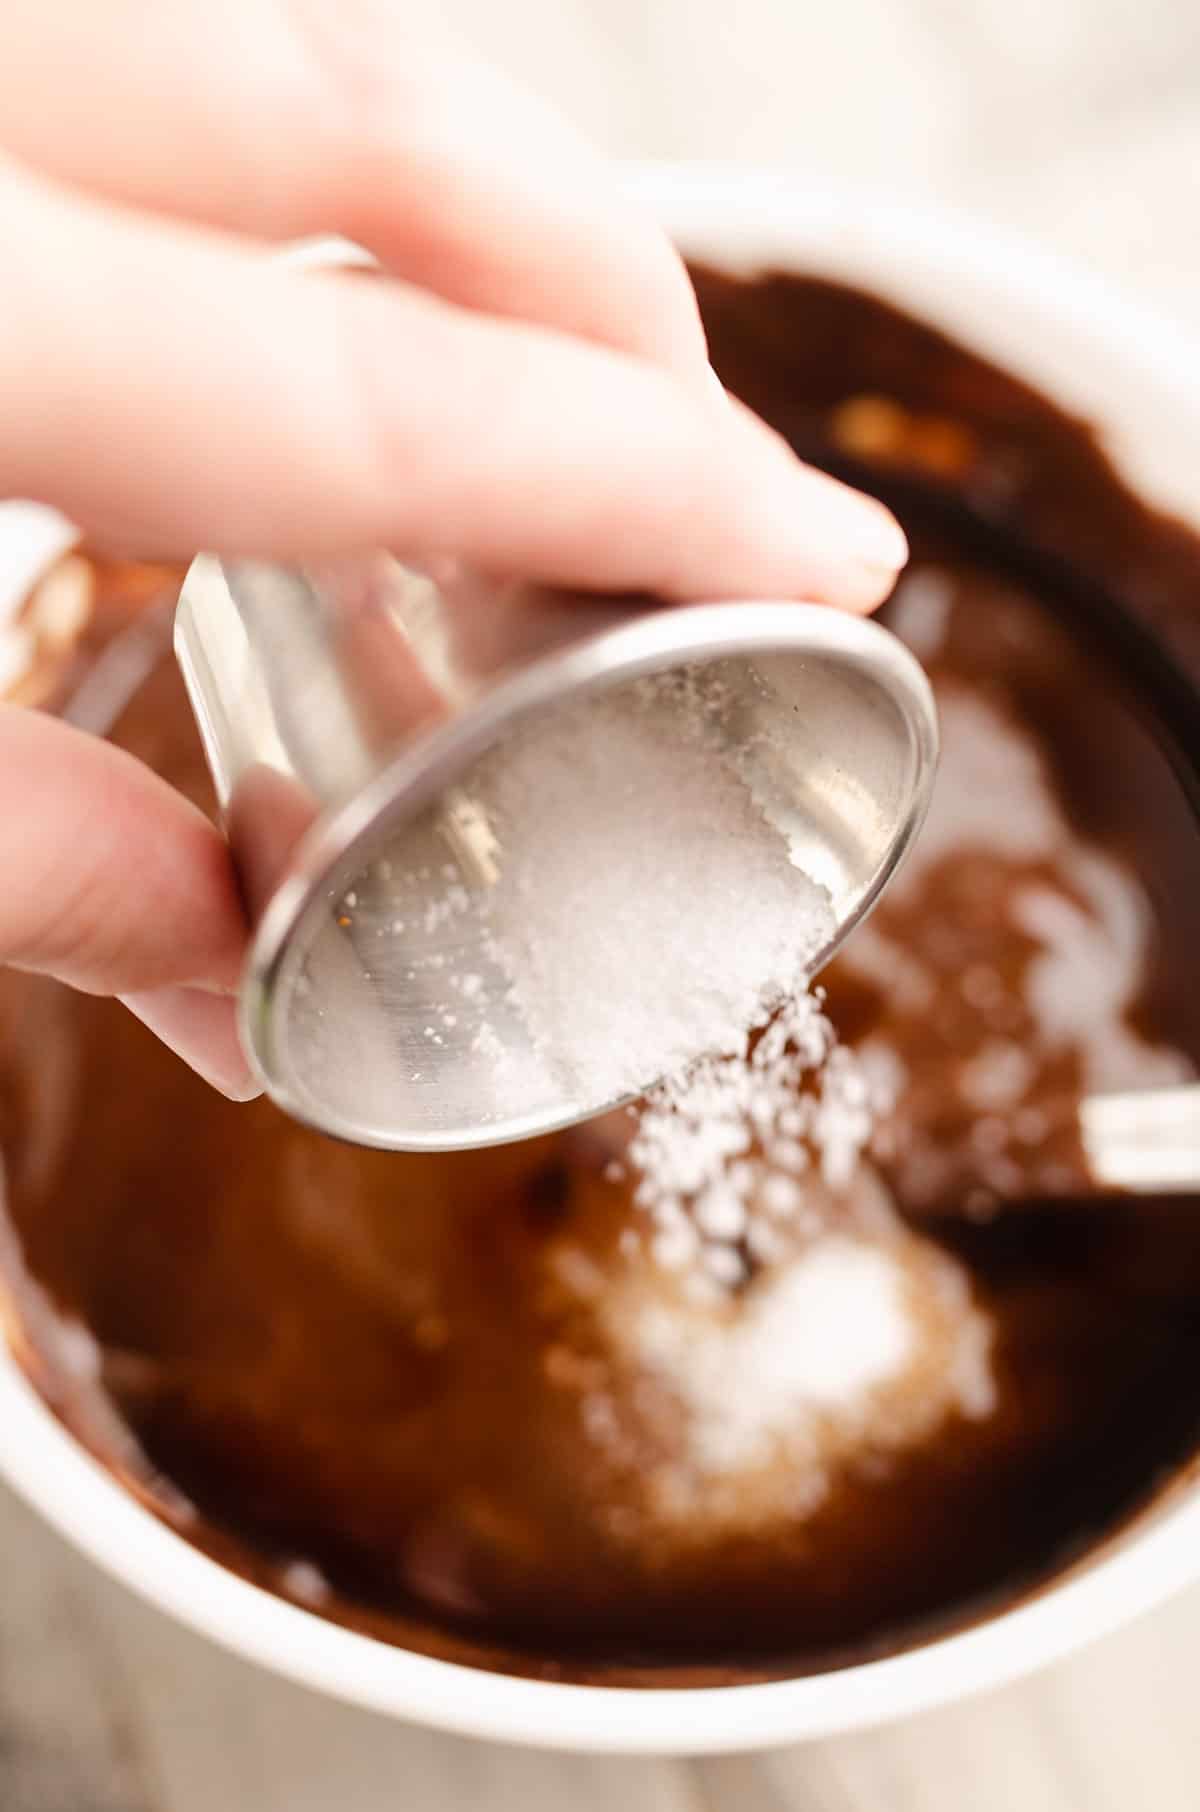 salt added to chocolate ganache